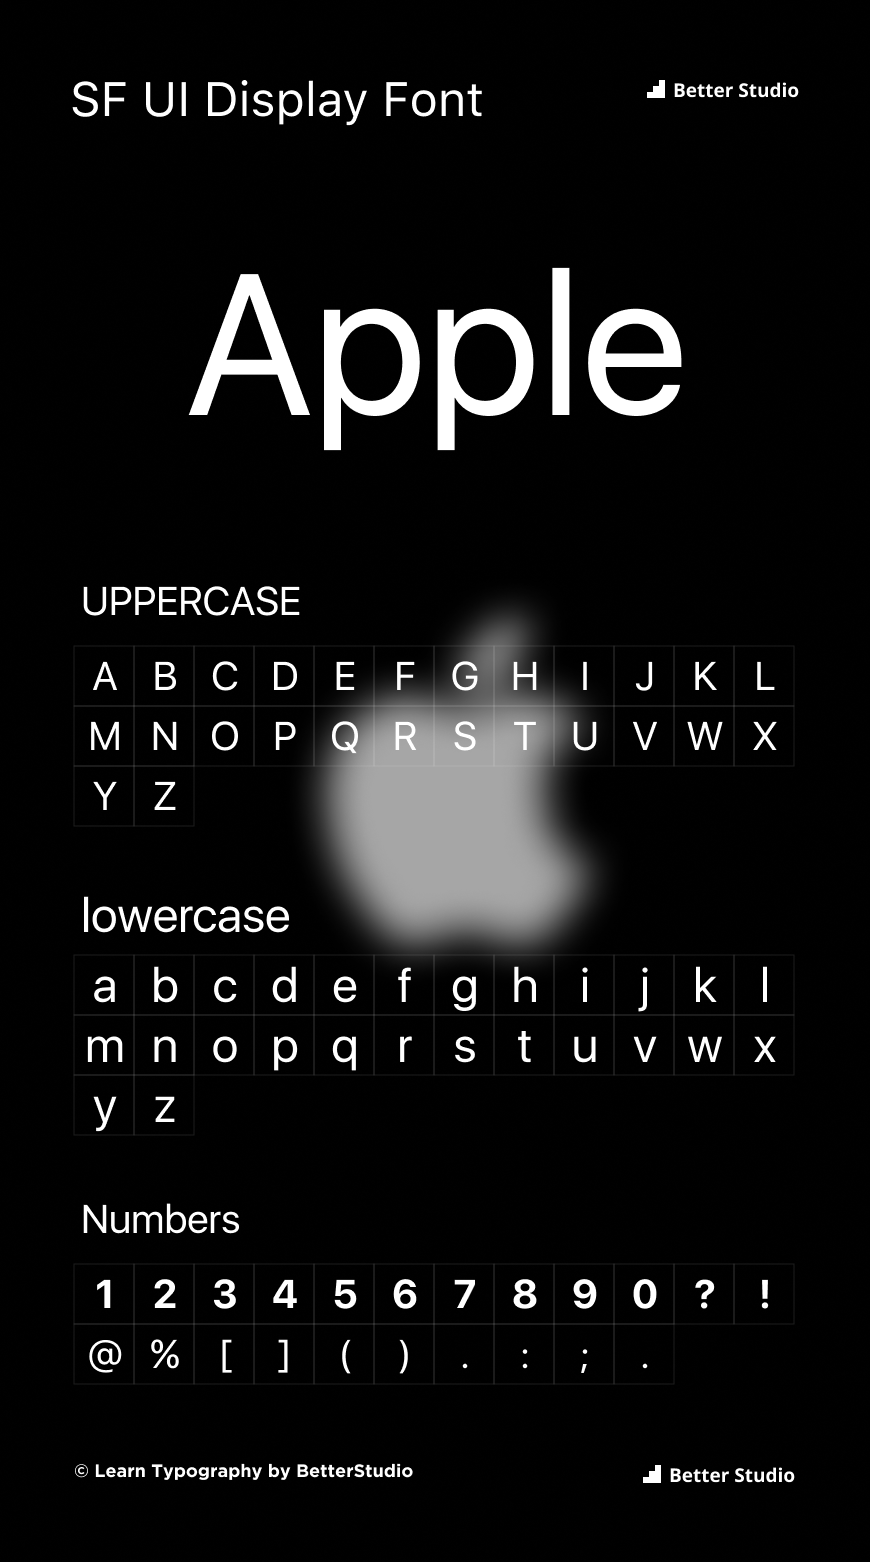 apple numbers logo